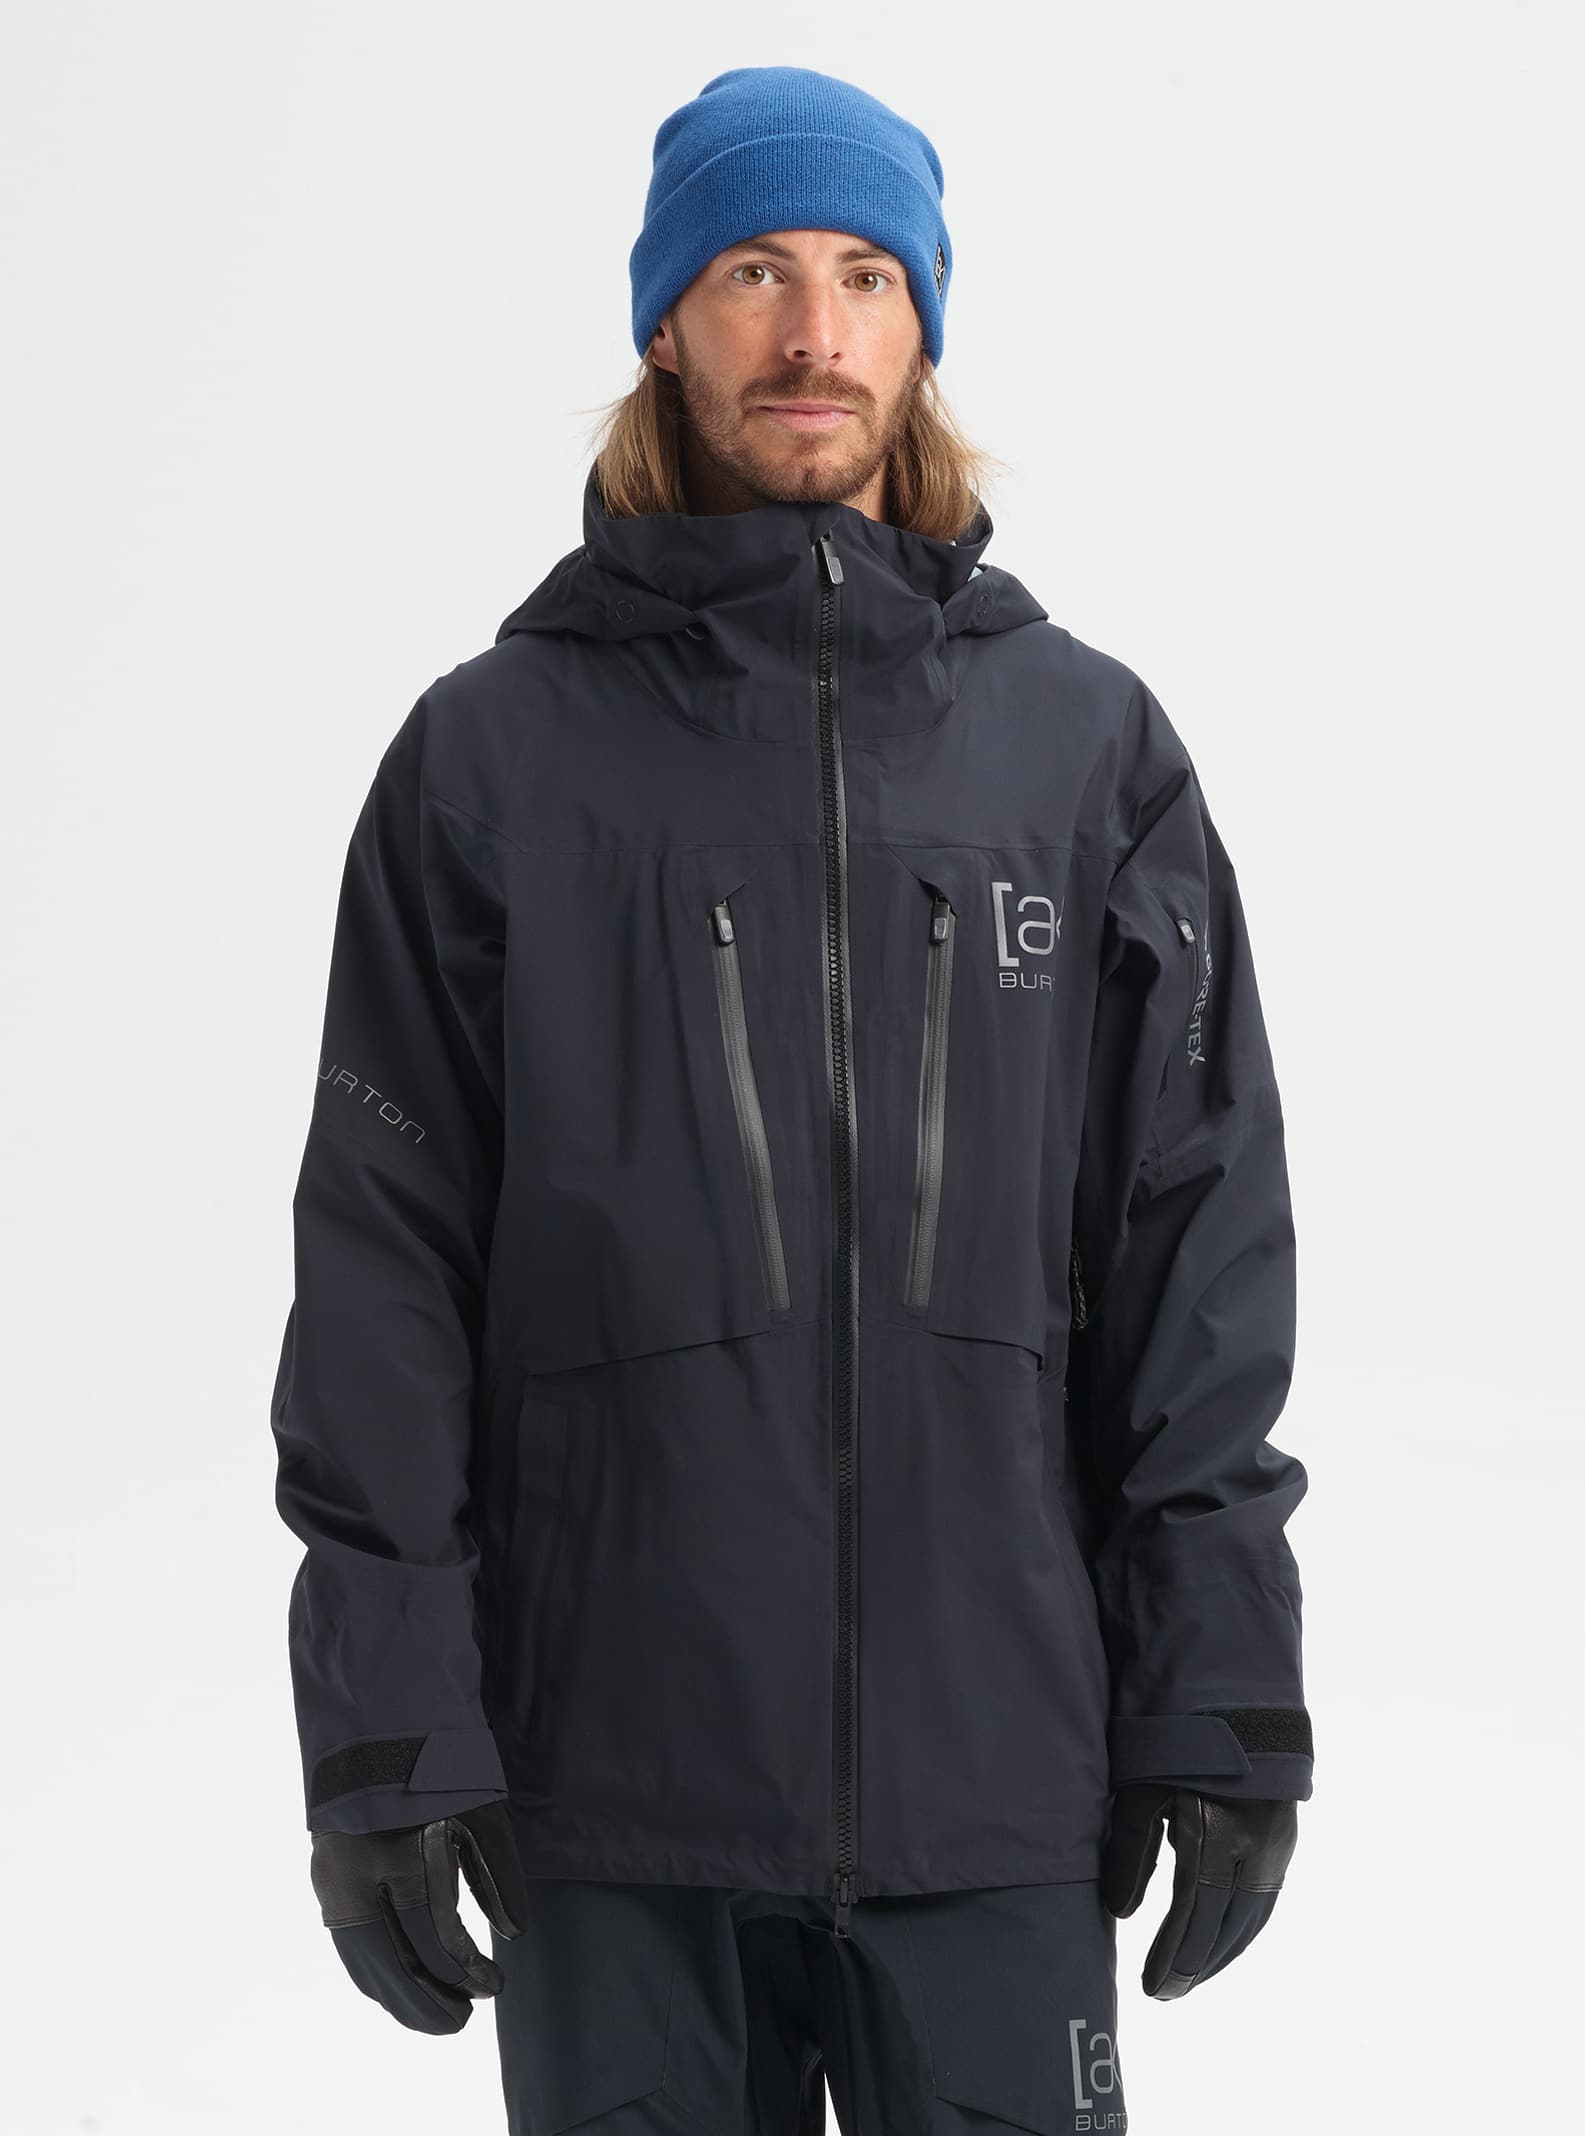 Men's Jackets, Coats, Snow Pants & Bibs | Burton Snowboards US